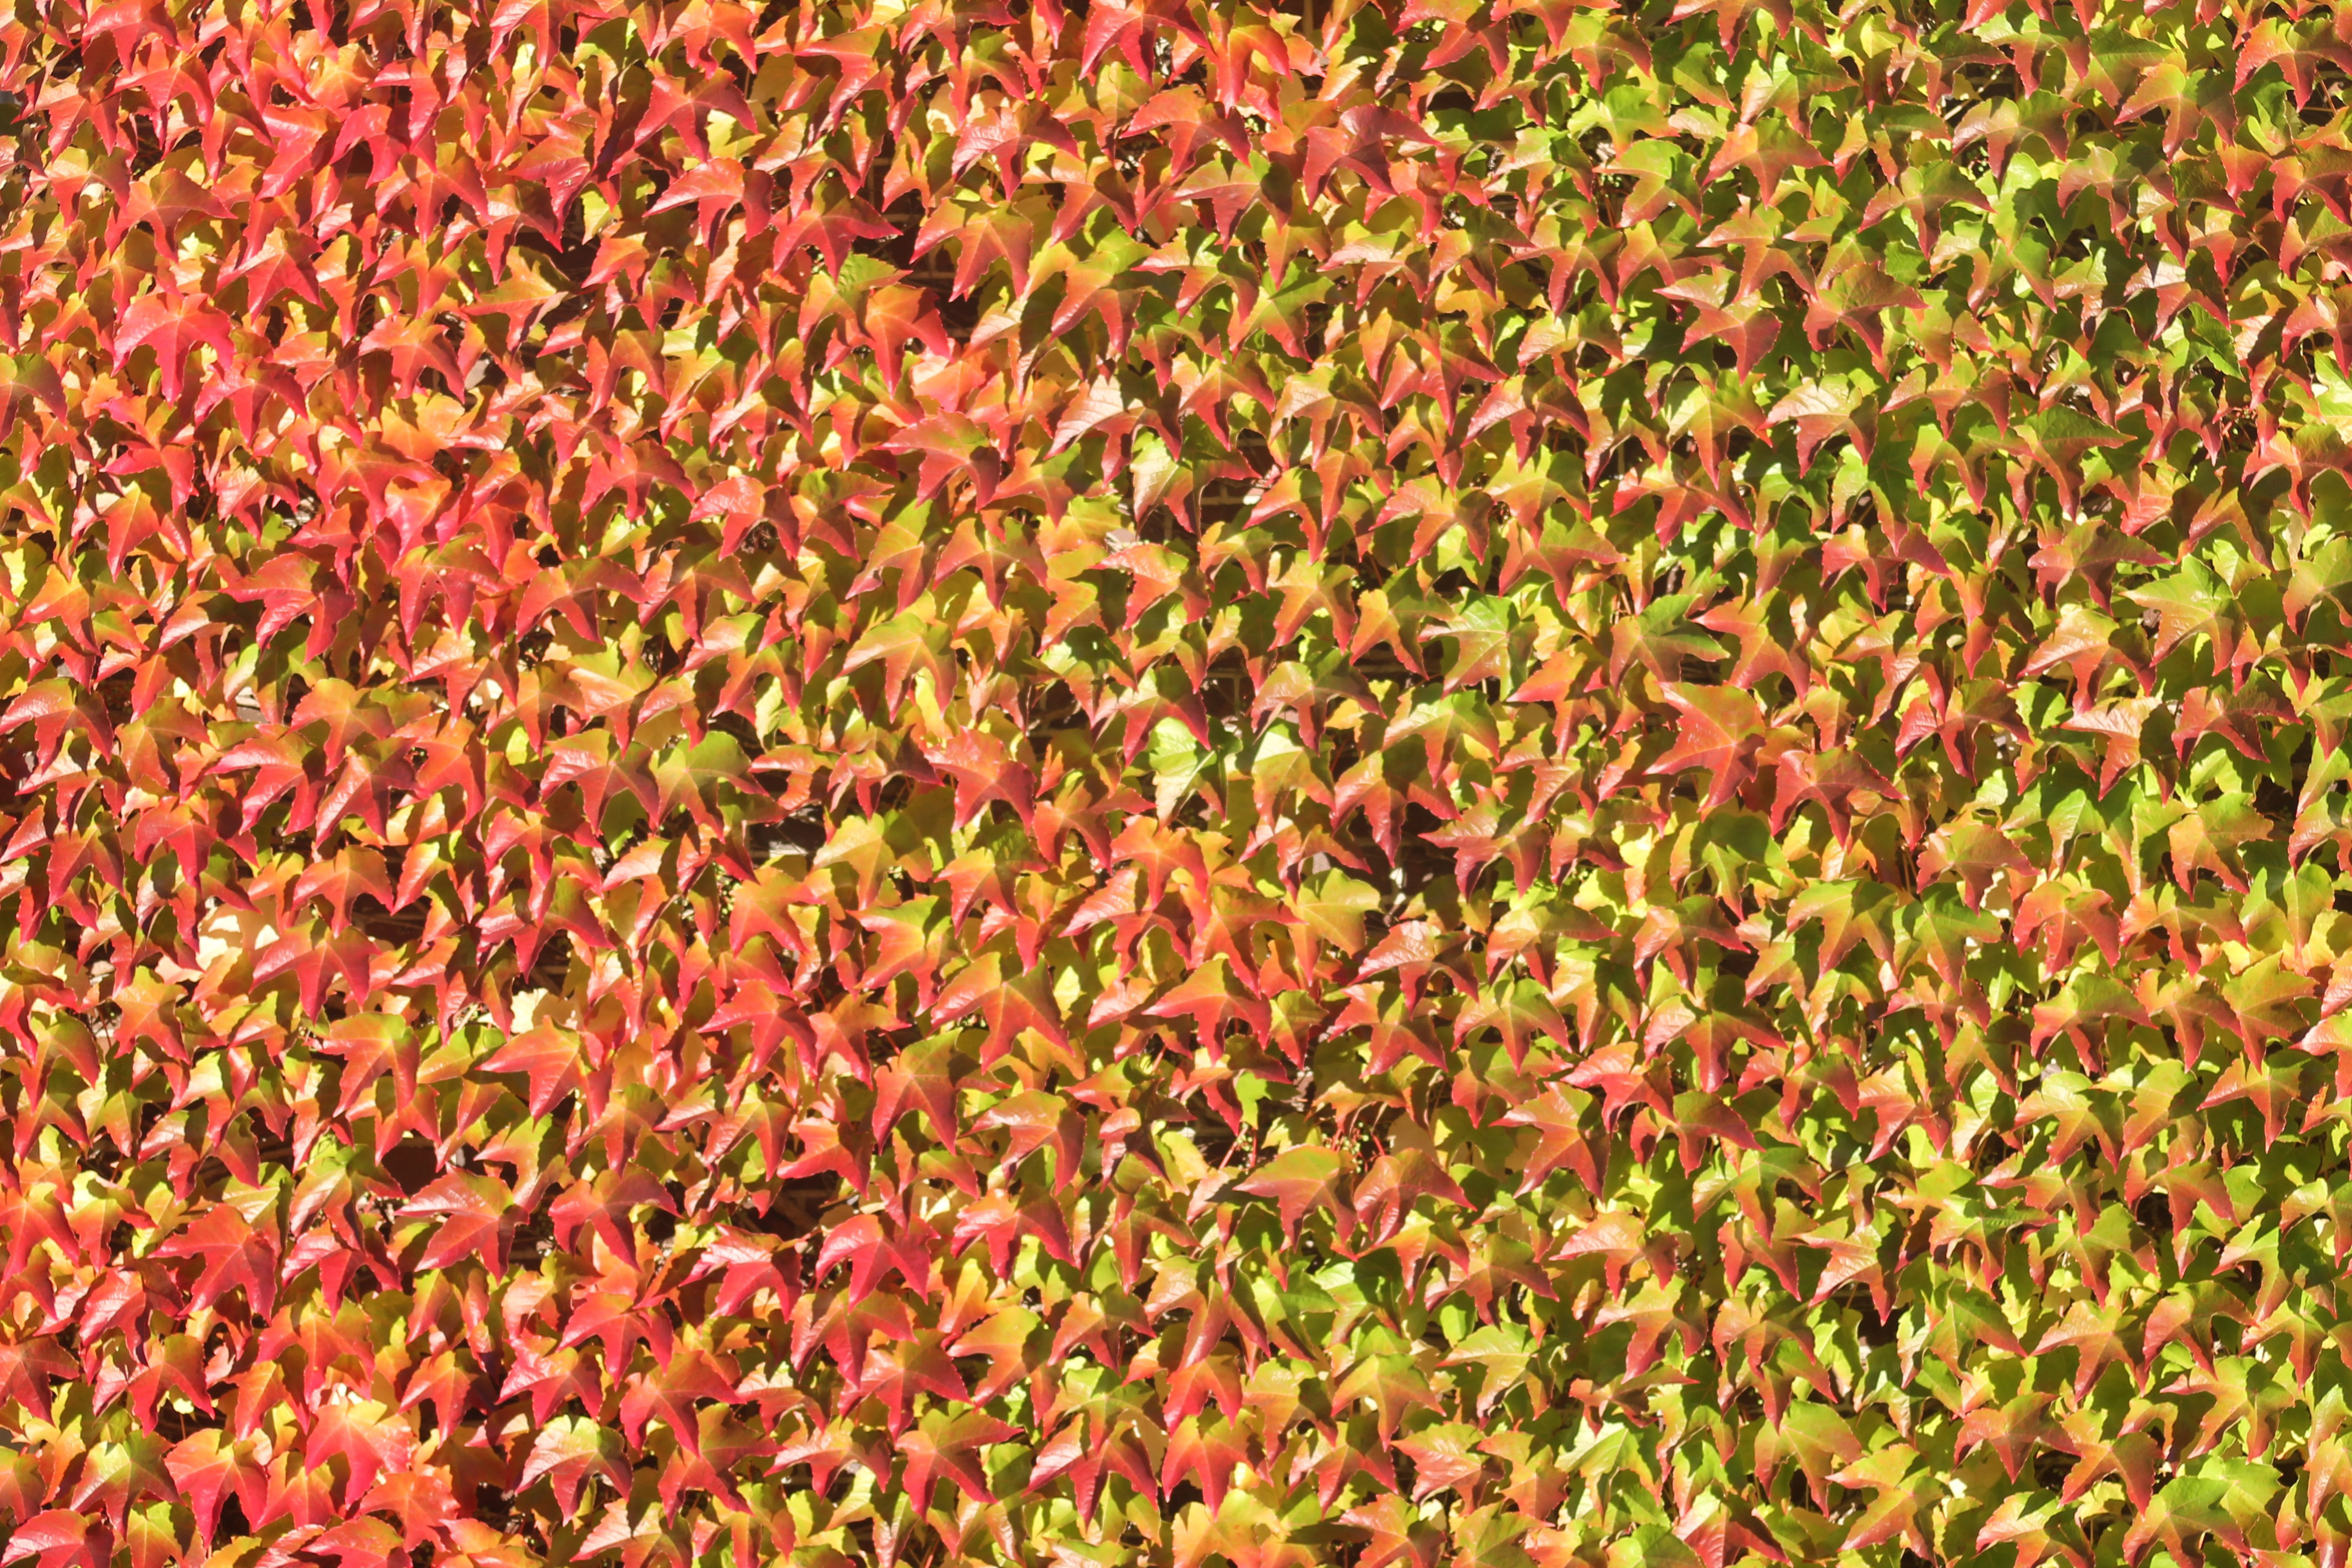 Autumn Leaves background pattern image - Free stock photo - Public ...